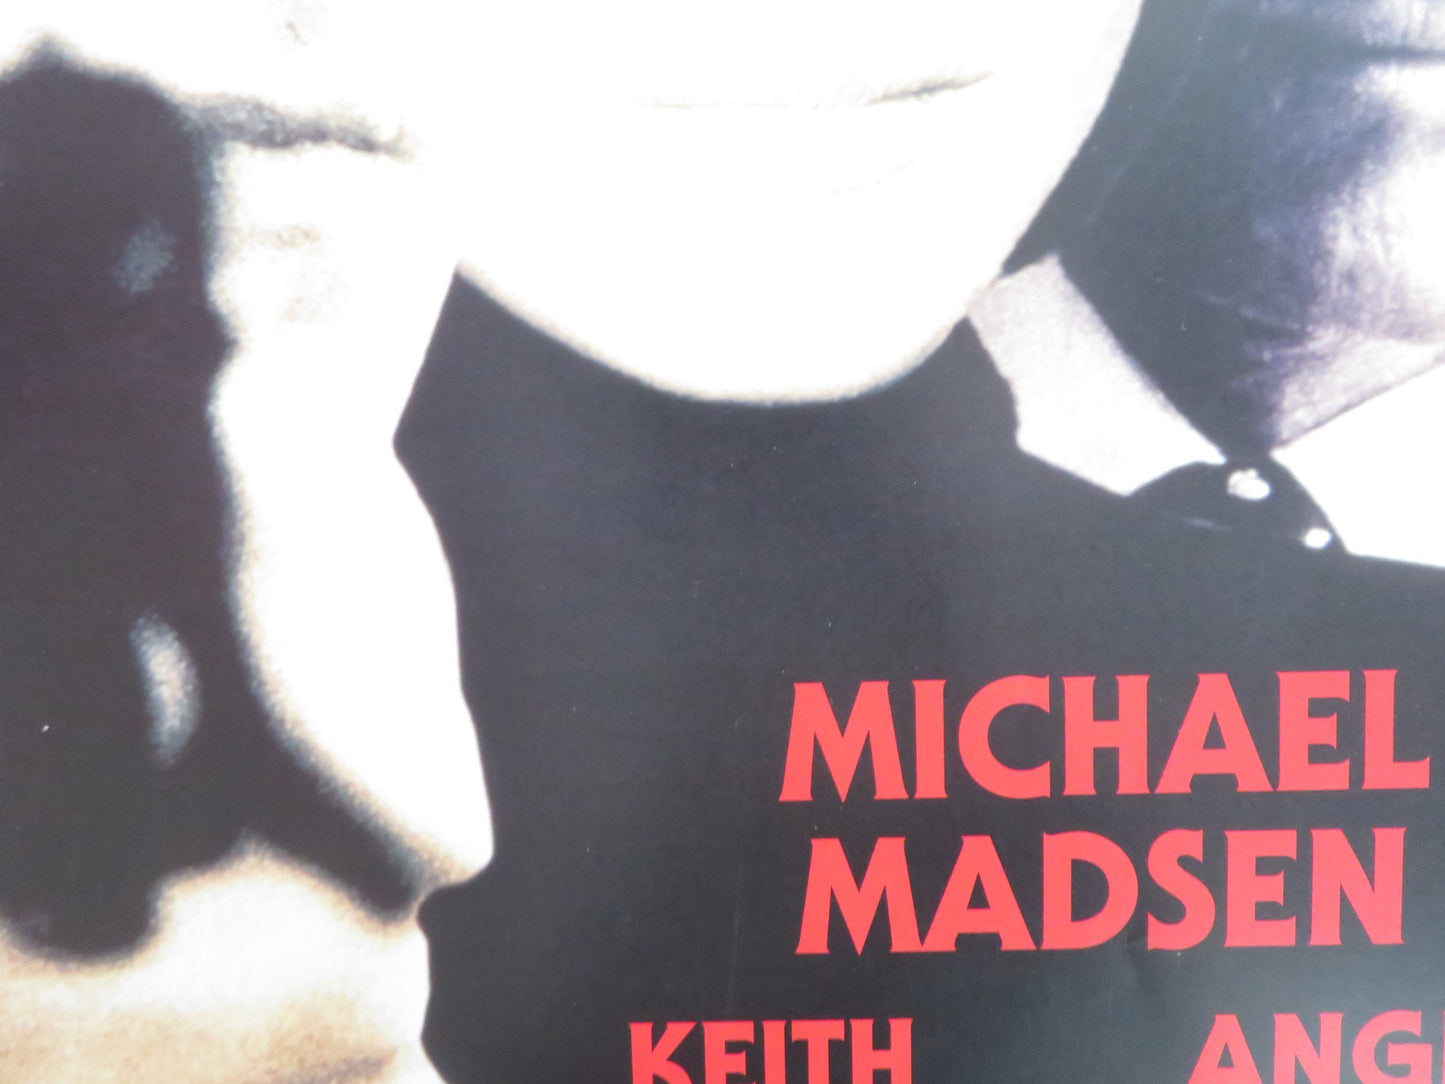 EXECUTIVE TARGET VHS VIDEO POSTER MICHAEL MADSEN ROY SCHEIDER 1997